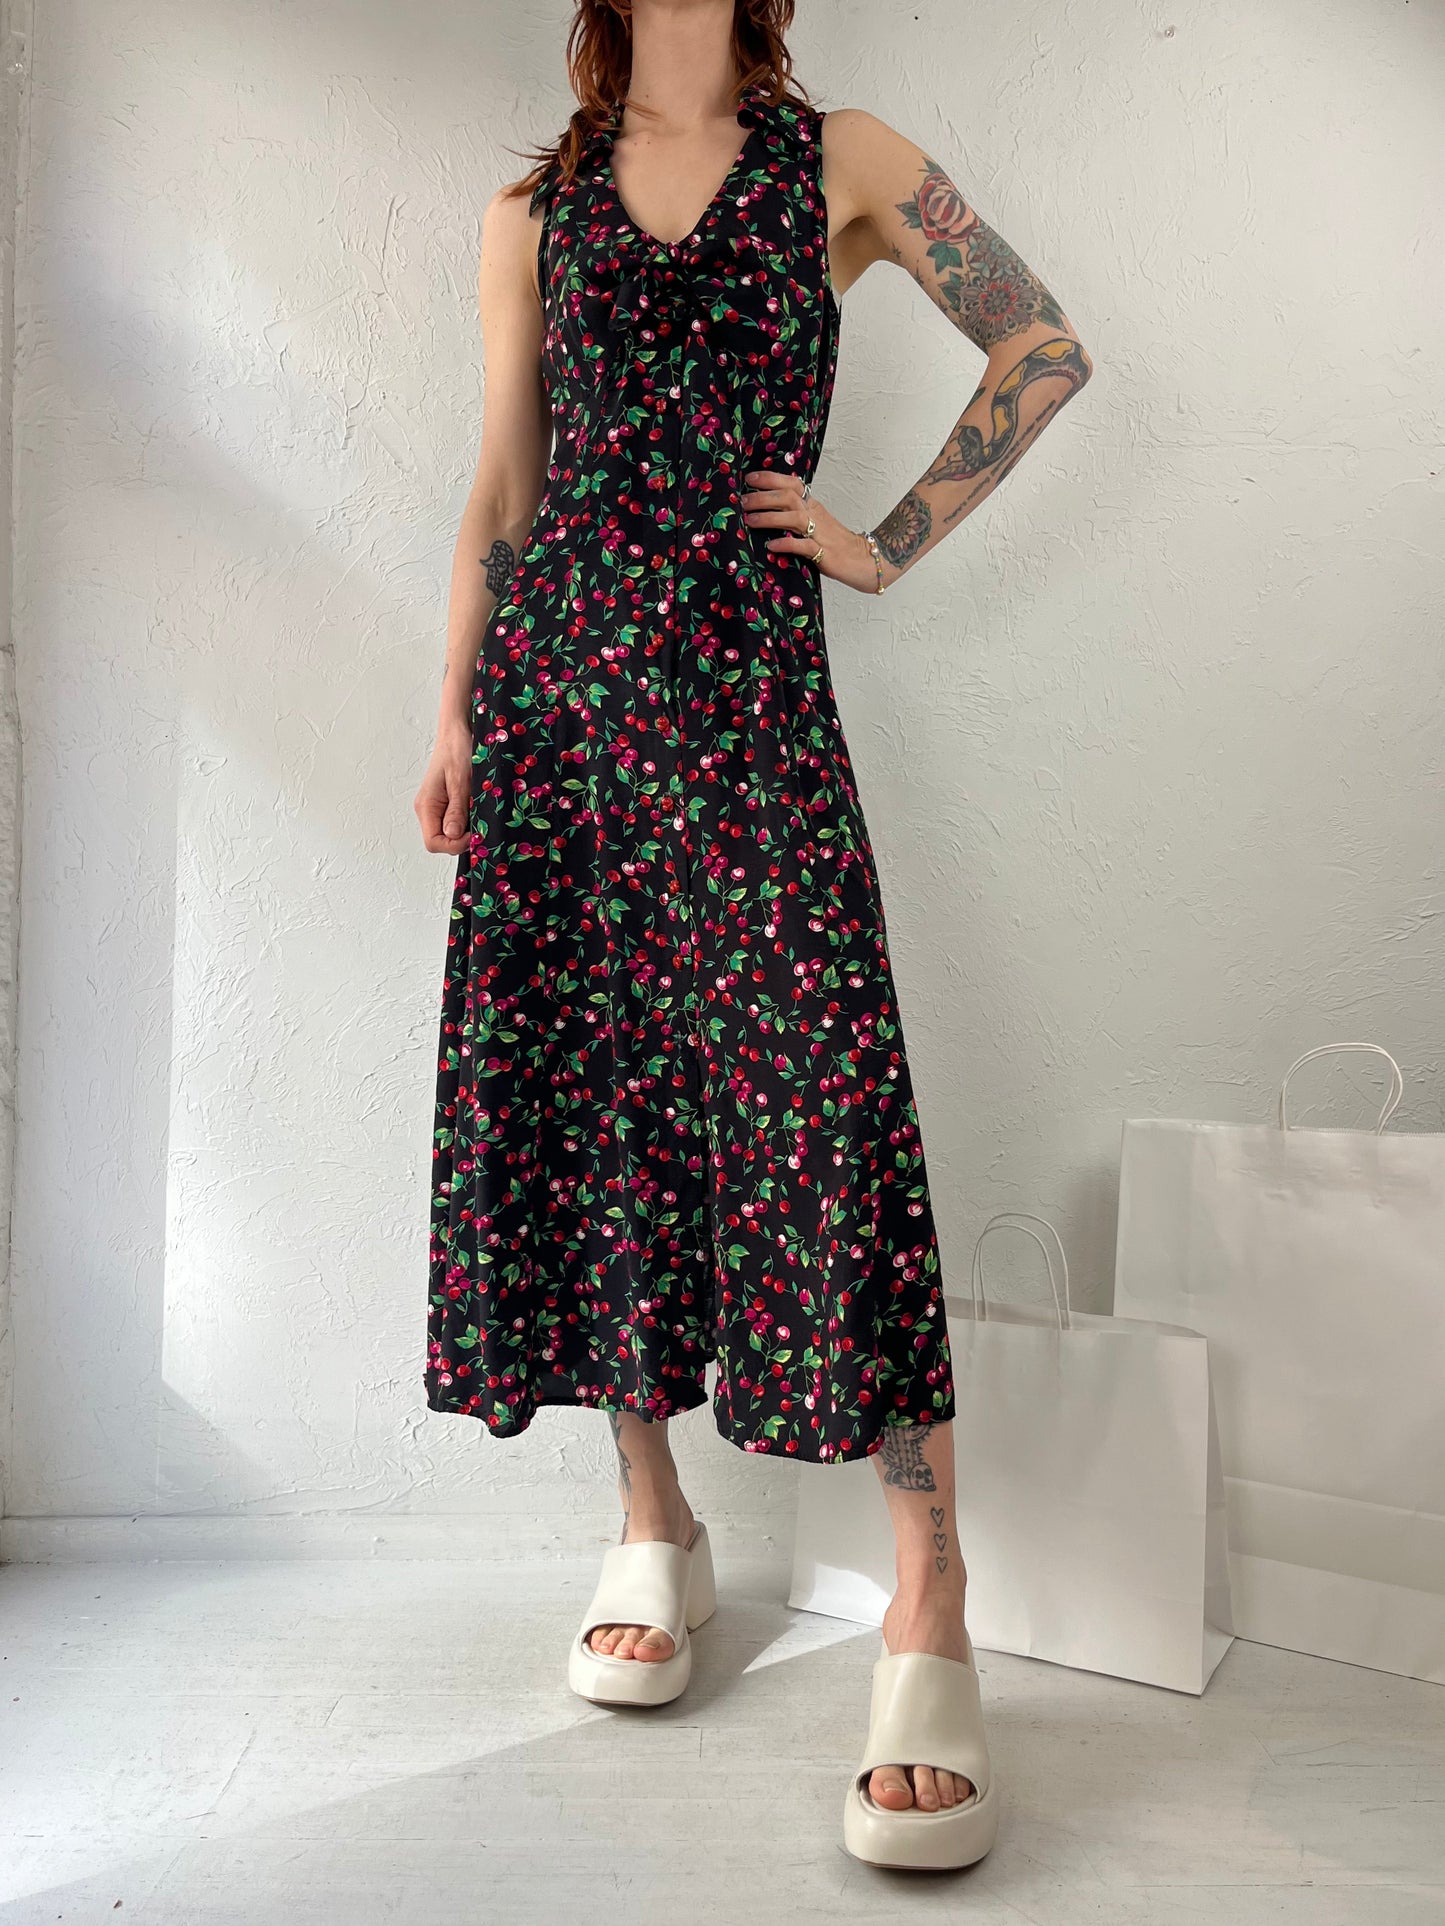 Y2k ' Robbie Bee' Cherry Print Button Up Sleeveless Maxi Dress / Small